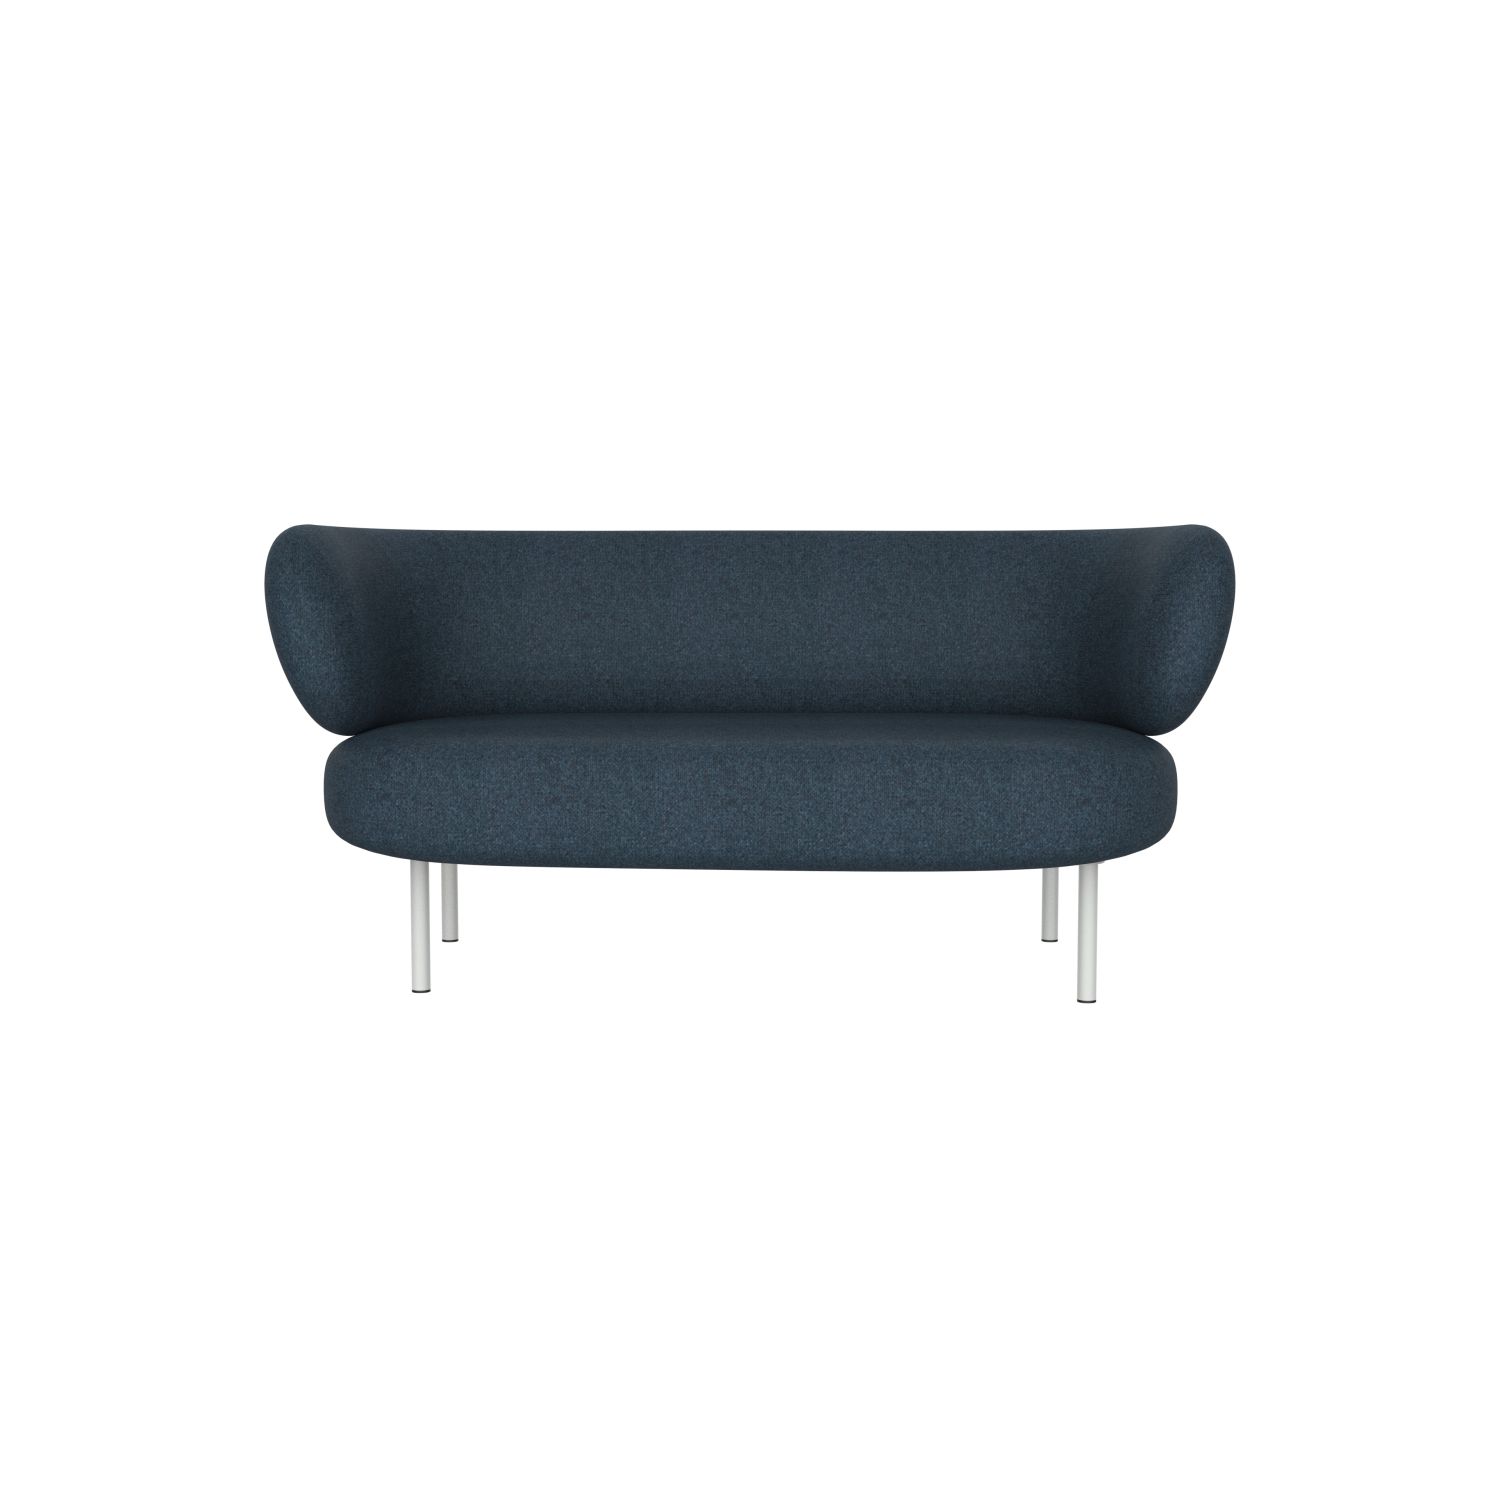 lensvelt studio stefan scholten sofa 2seater 160x84cm middle lounge part moss night blue 45 frame light grey ral7035